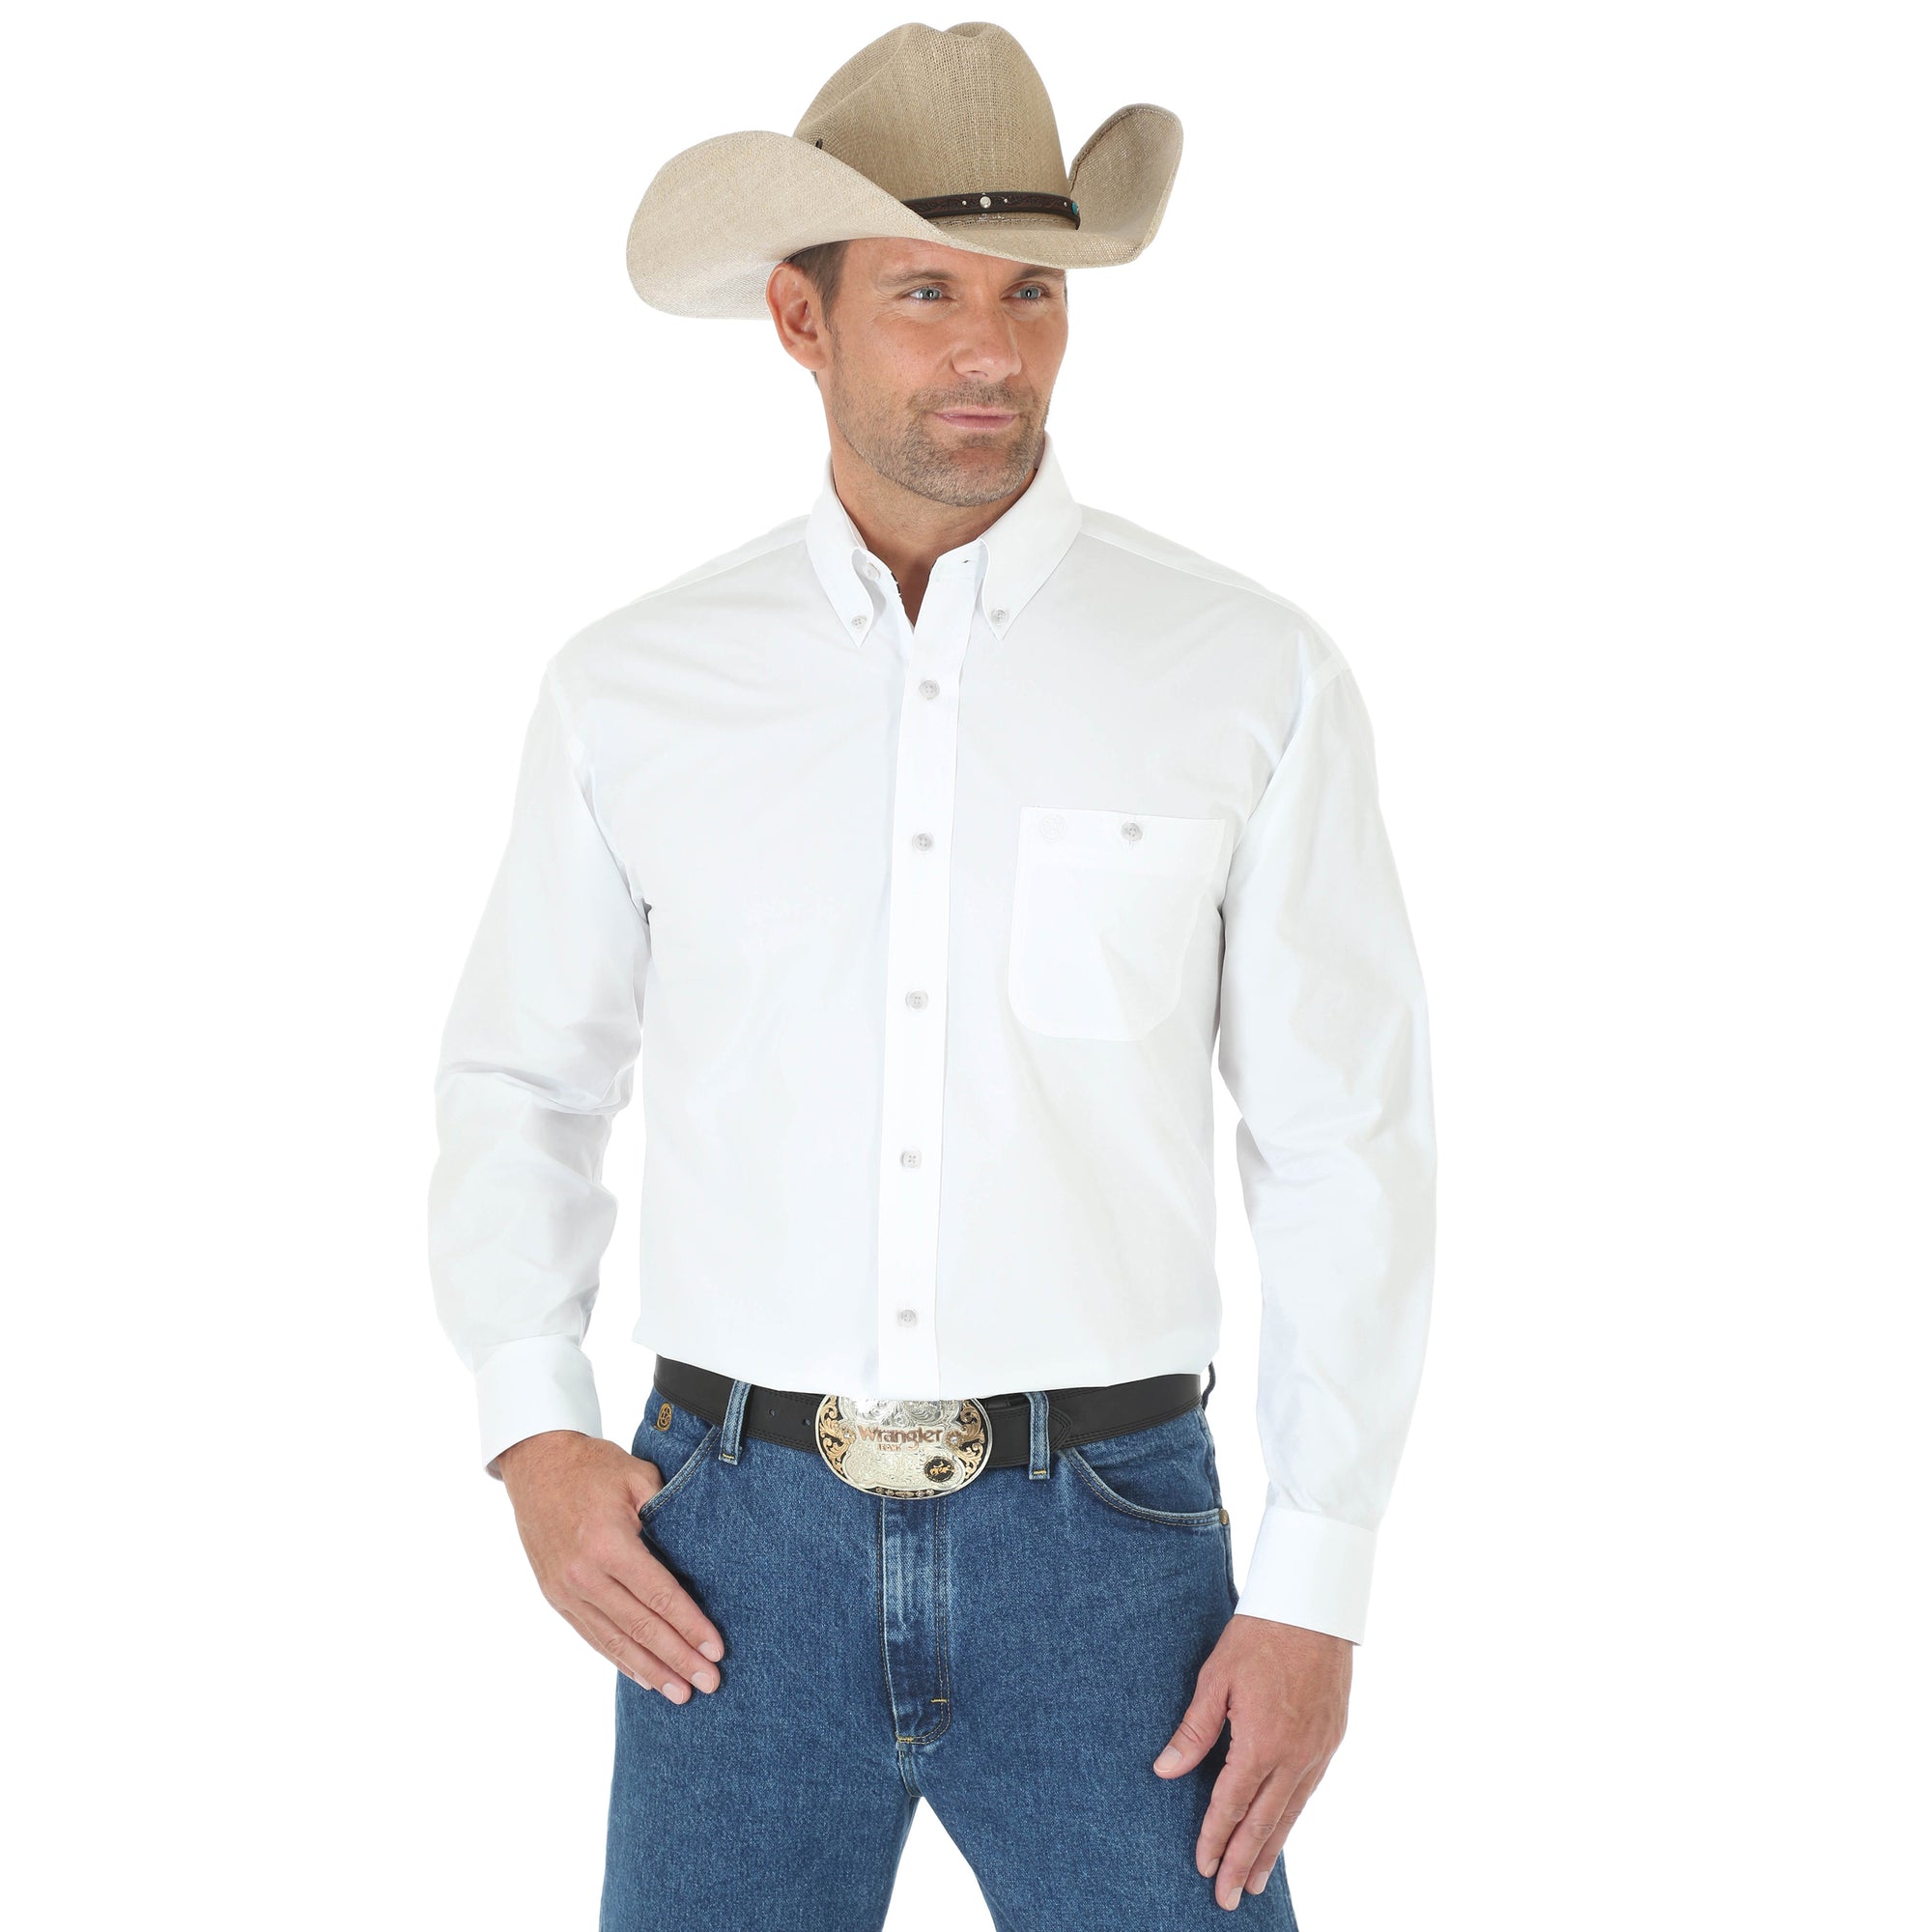 Wrangler Men's George Strait Long Sleeve Shirt STYLE MGS268W